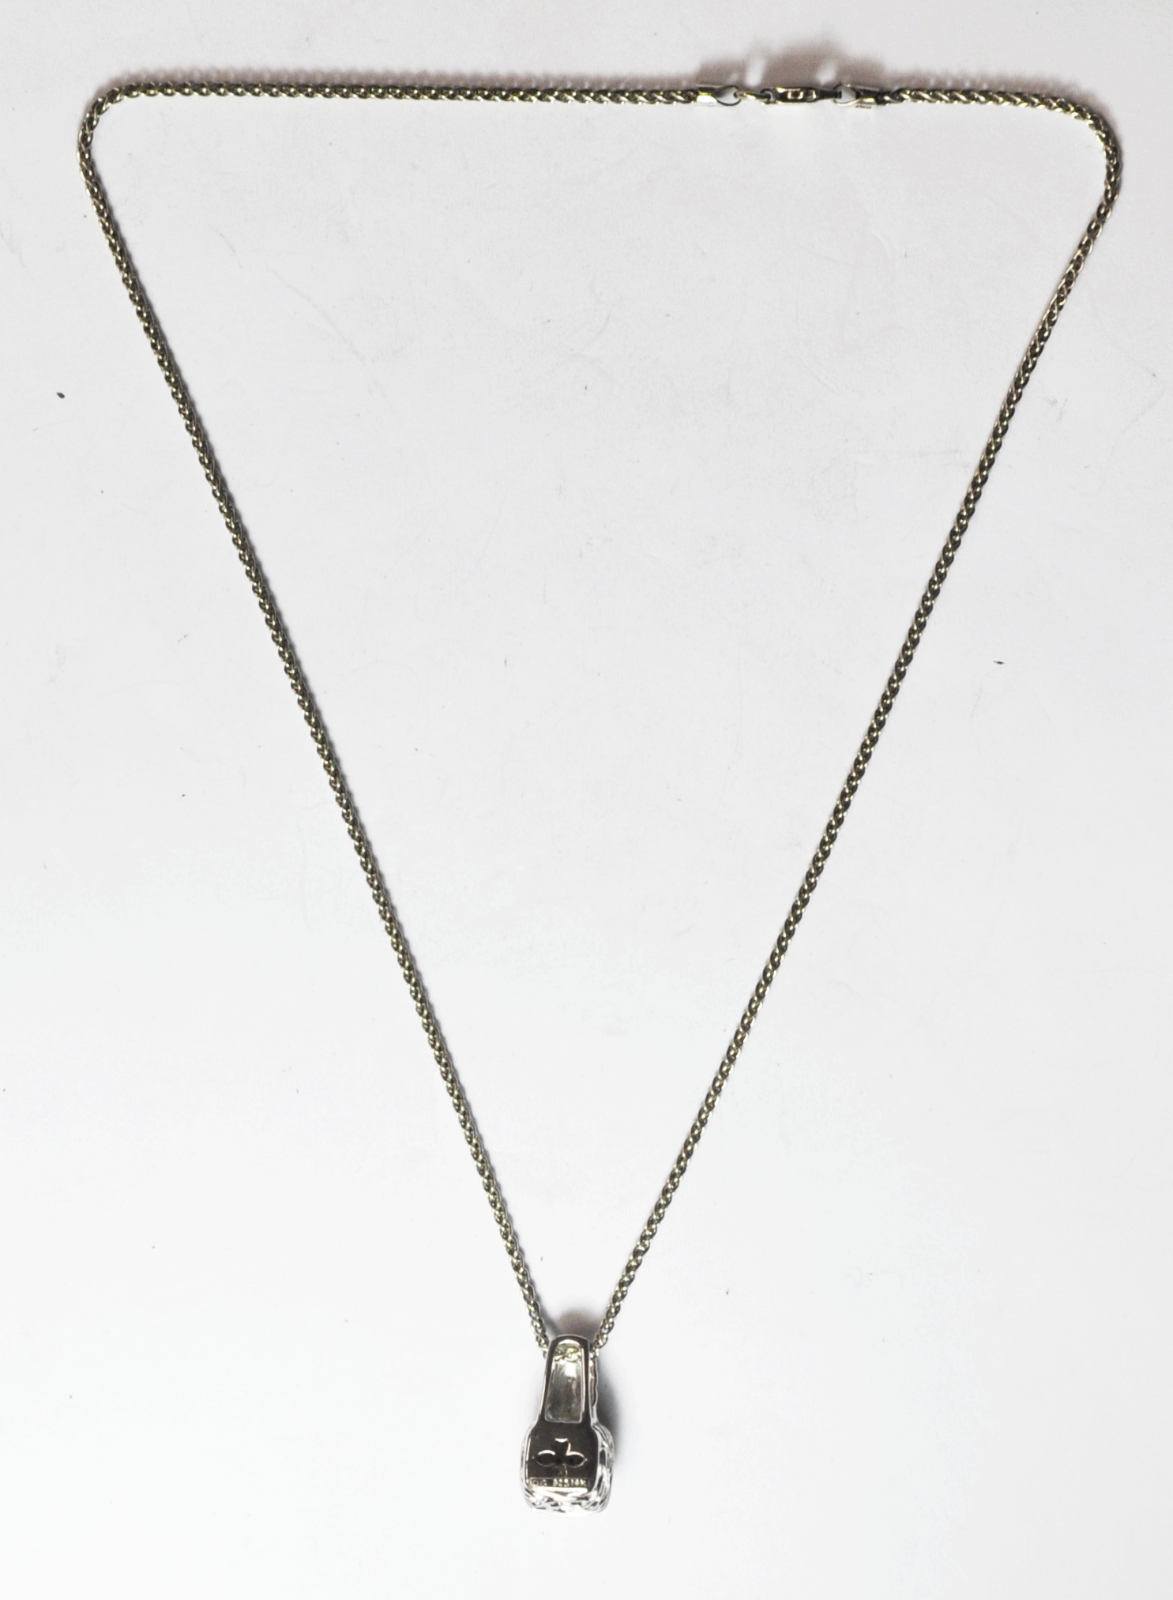 Sterling Silver 14k QG Diamond Pendant 22mm x 11mm Necklace 17-3/4"